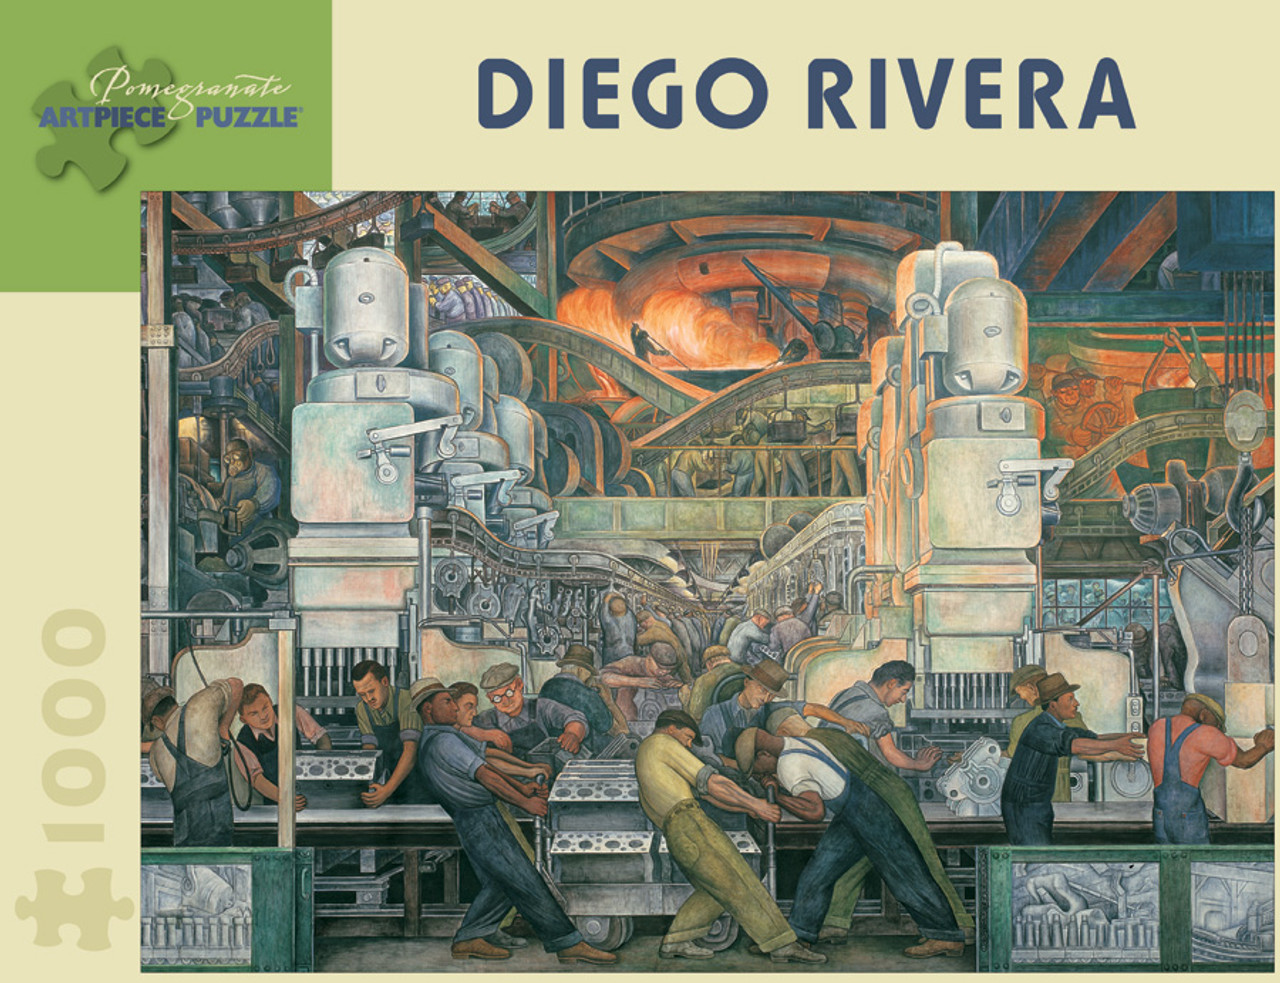 Diego Rivera: Detroit Industry 1,000-piece Jigsaw Puzzle